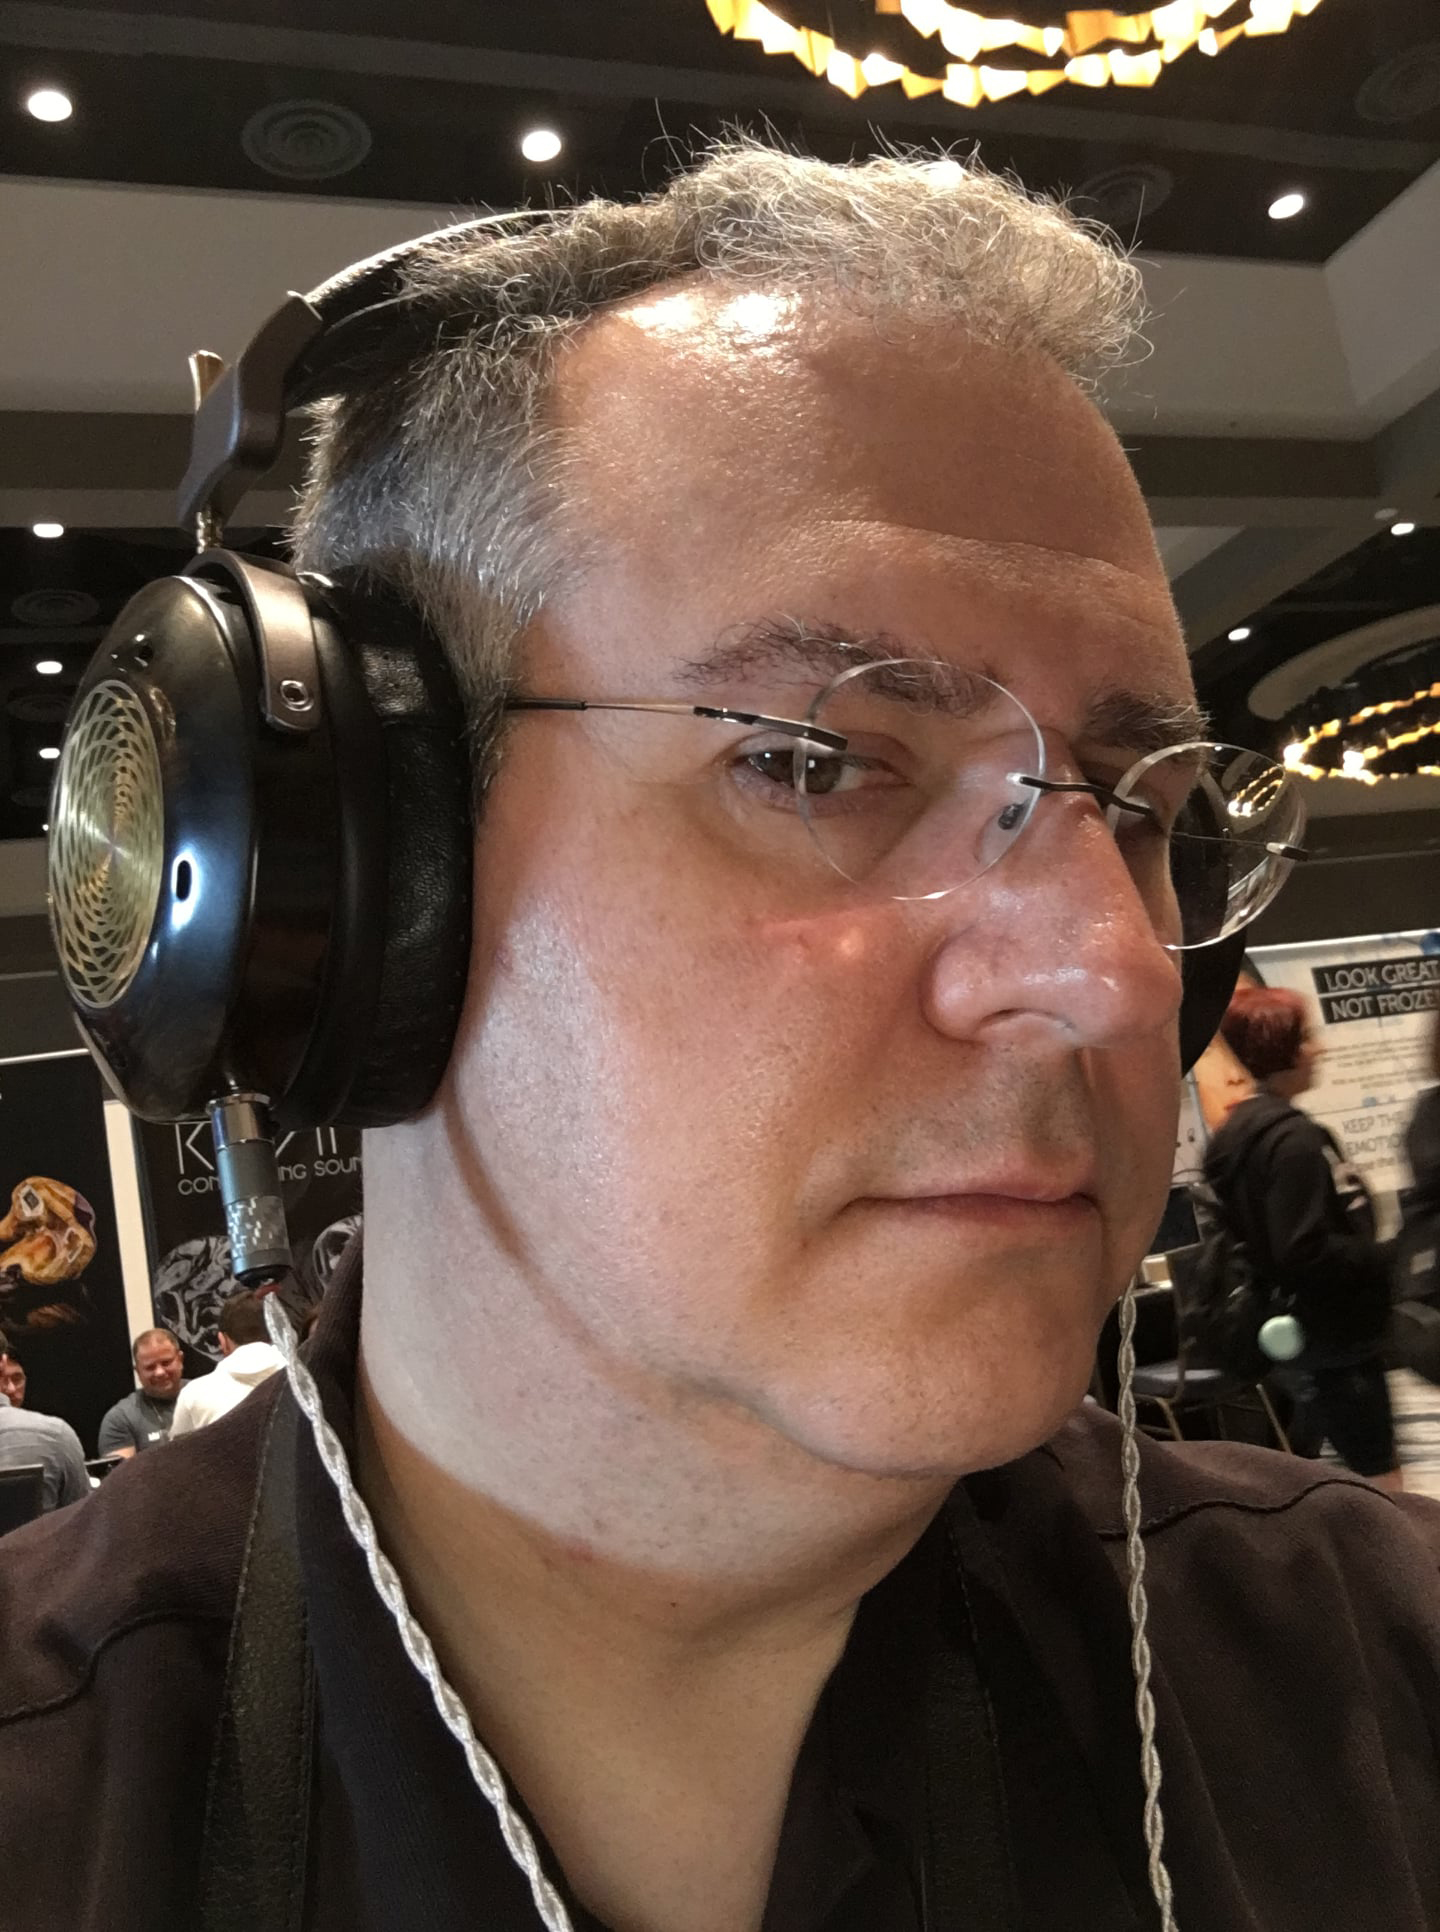 ZMF Headphones In Use